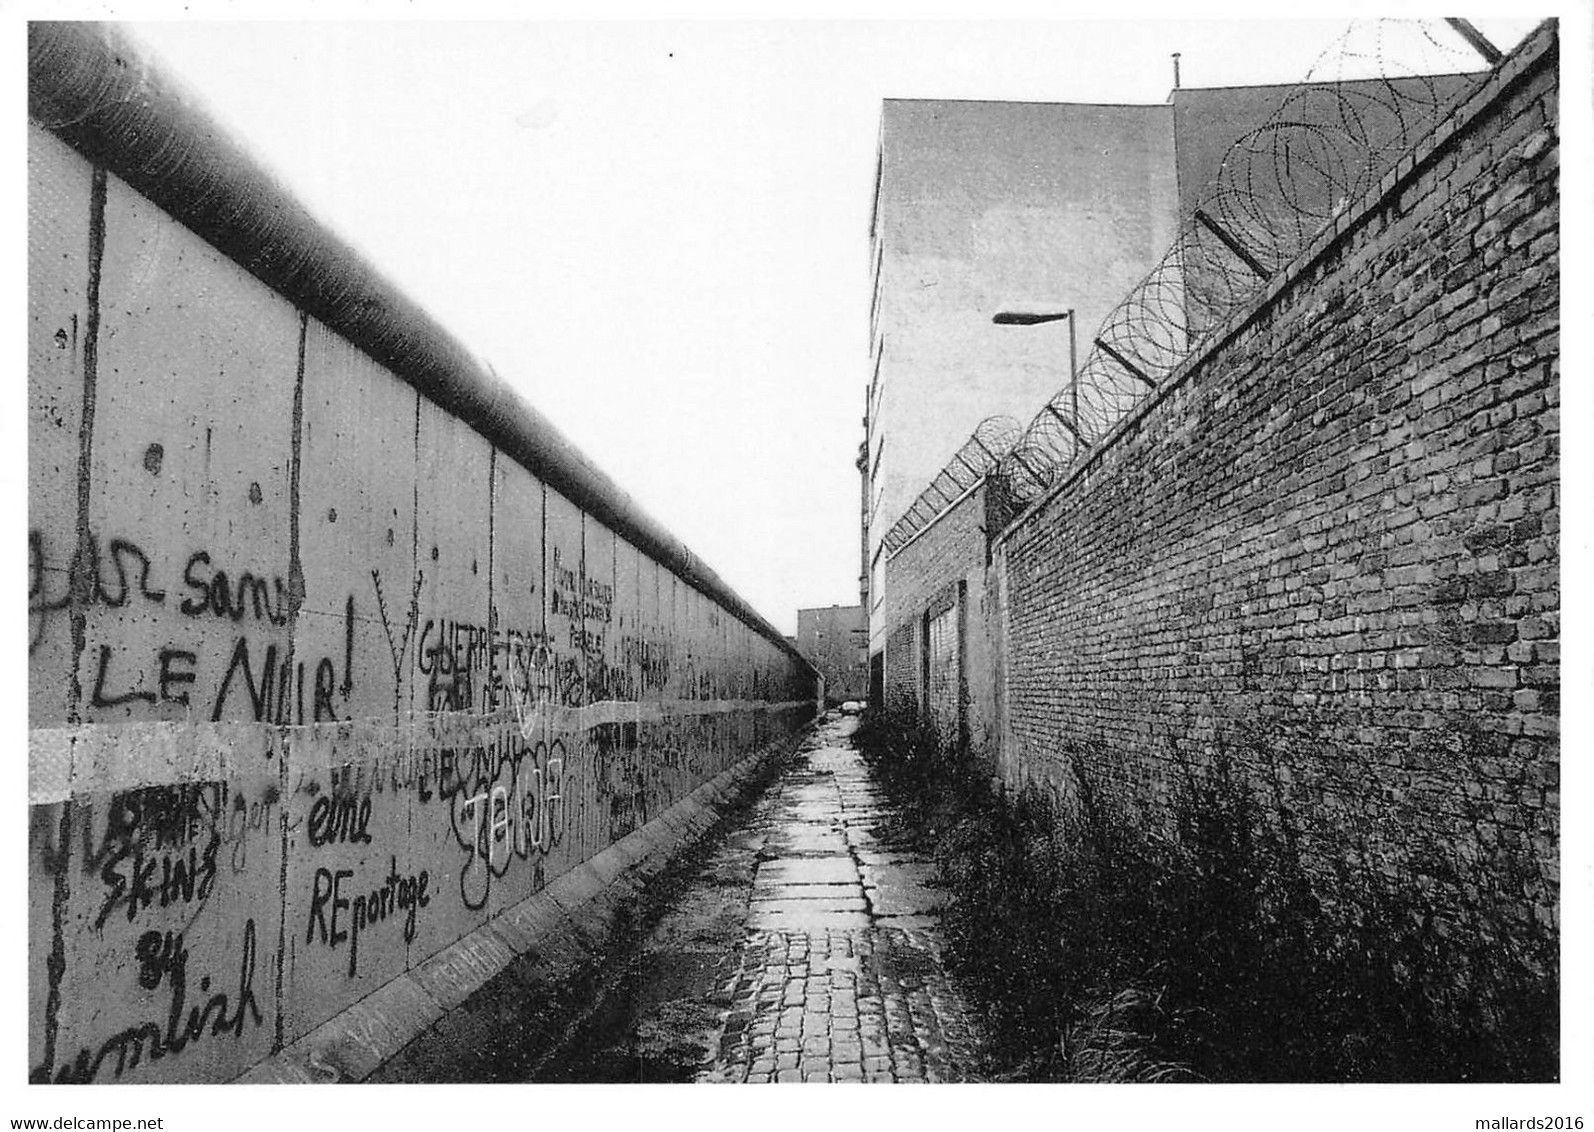 BERLINER MAUER, KOMMANDANTENSTRASSE ~ AN OLD REAL PHOTO - POSTCARD SIZE 15 X 10.5 Cm #2231201 - Mur De Berlin